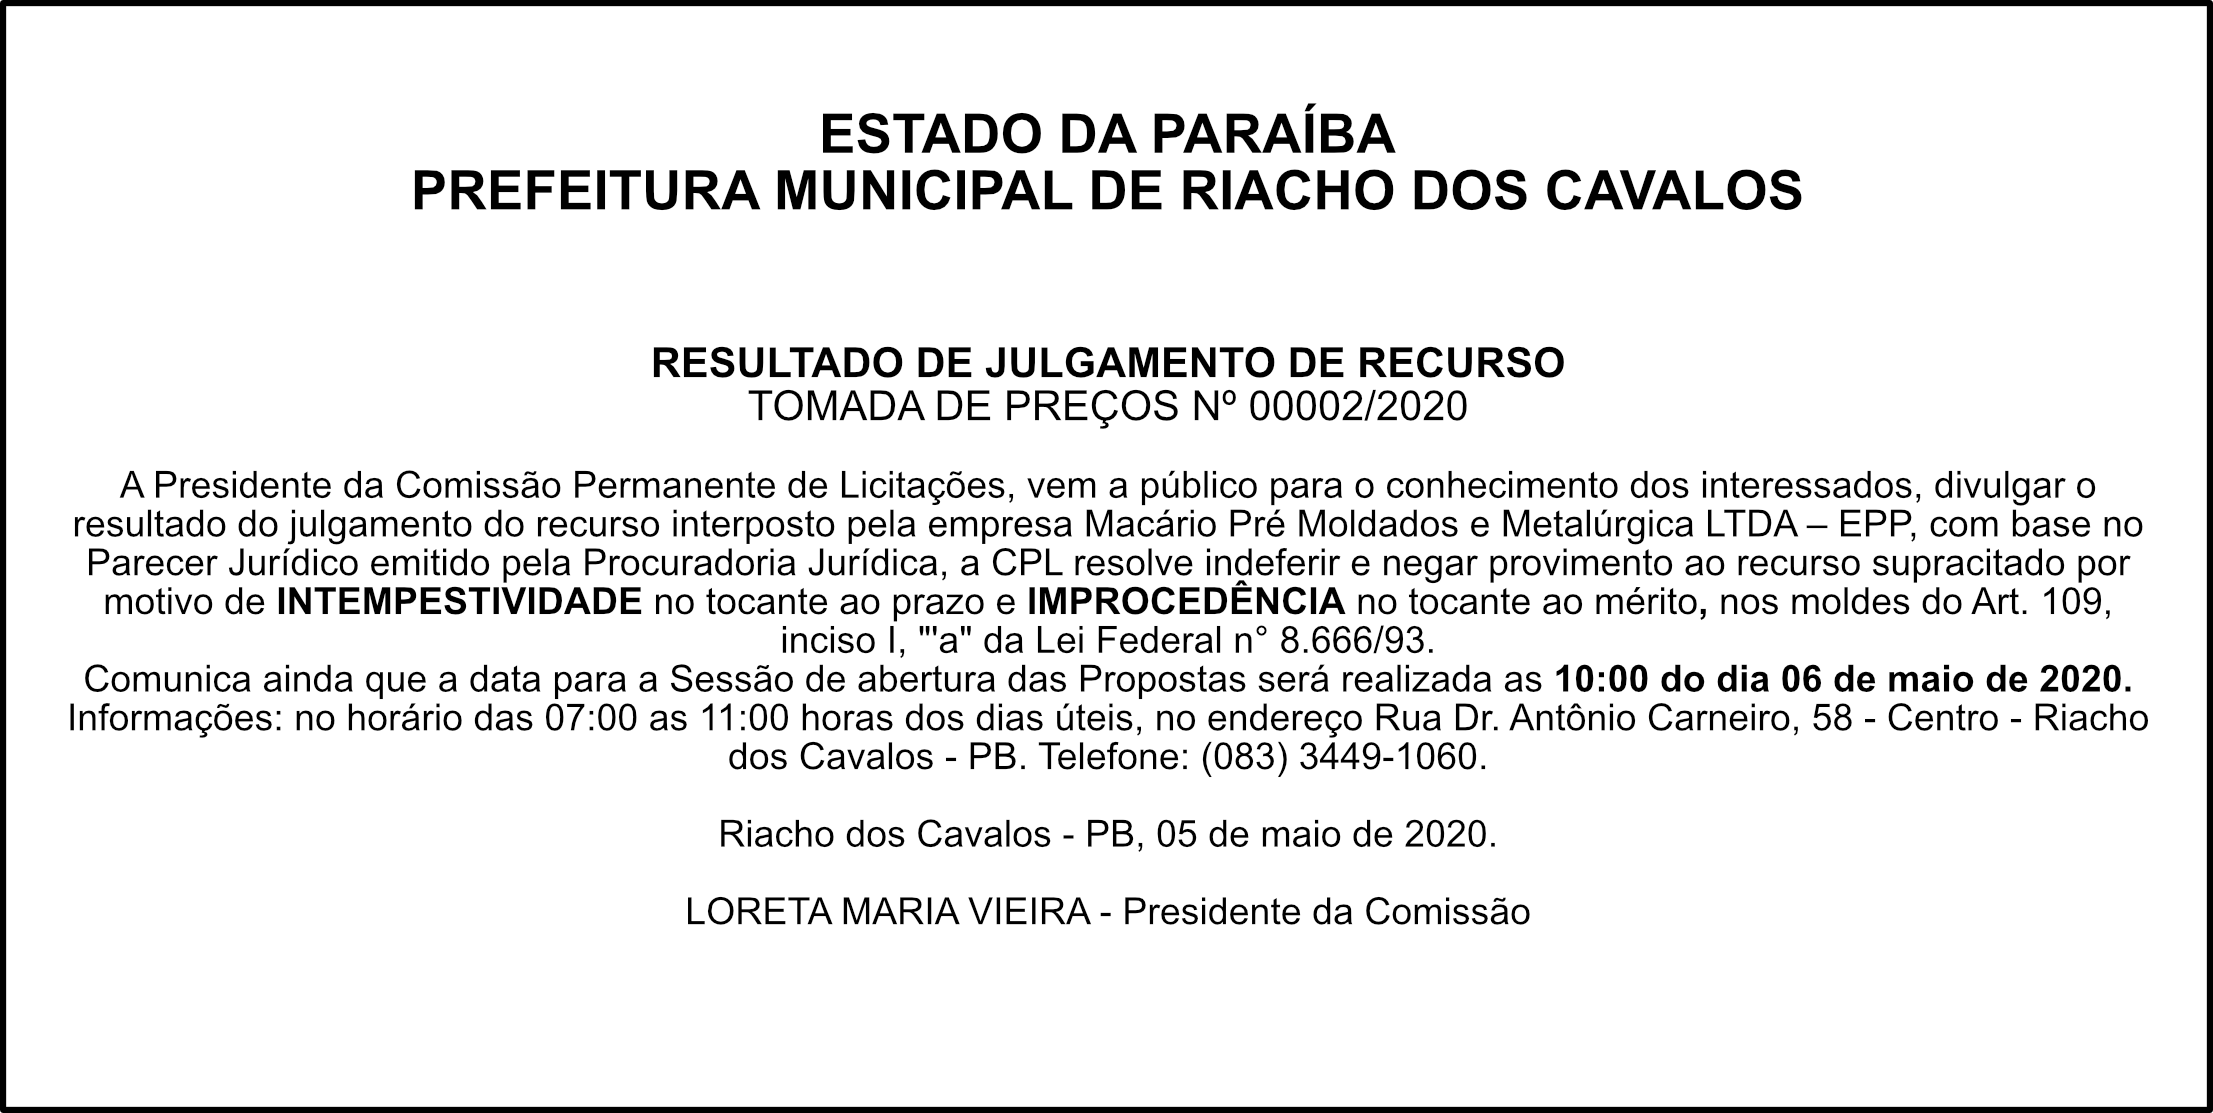 PREF. MUN. DE RIACHO DOS CAVALOS – RESULTADO DE JULGAMENTO DE RECURSO – TOMADA DE PREÇOS Nº 00002/2020